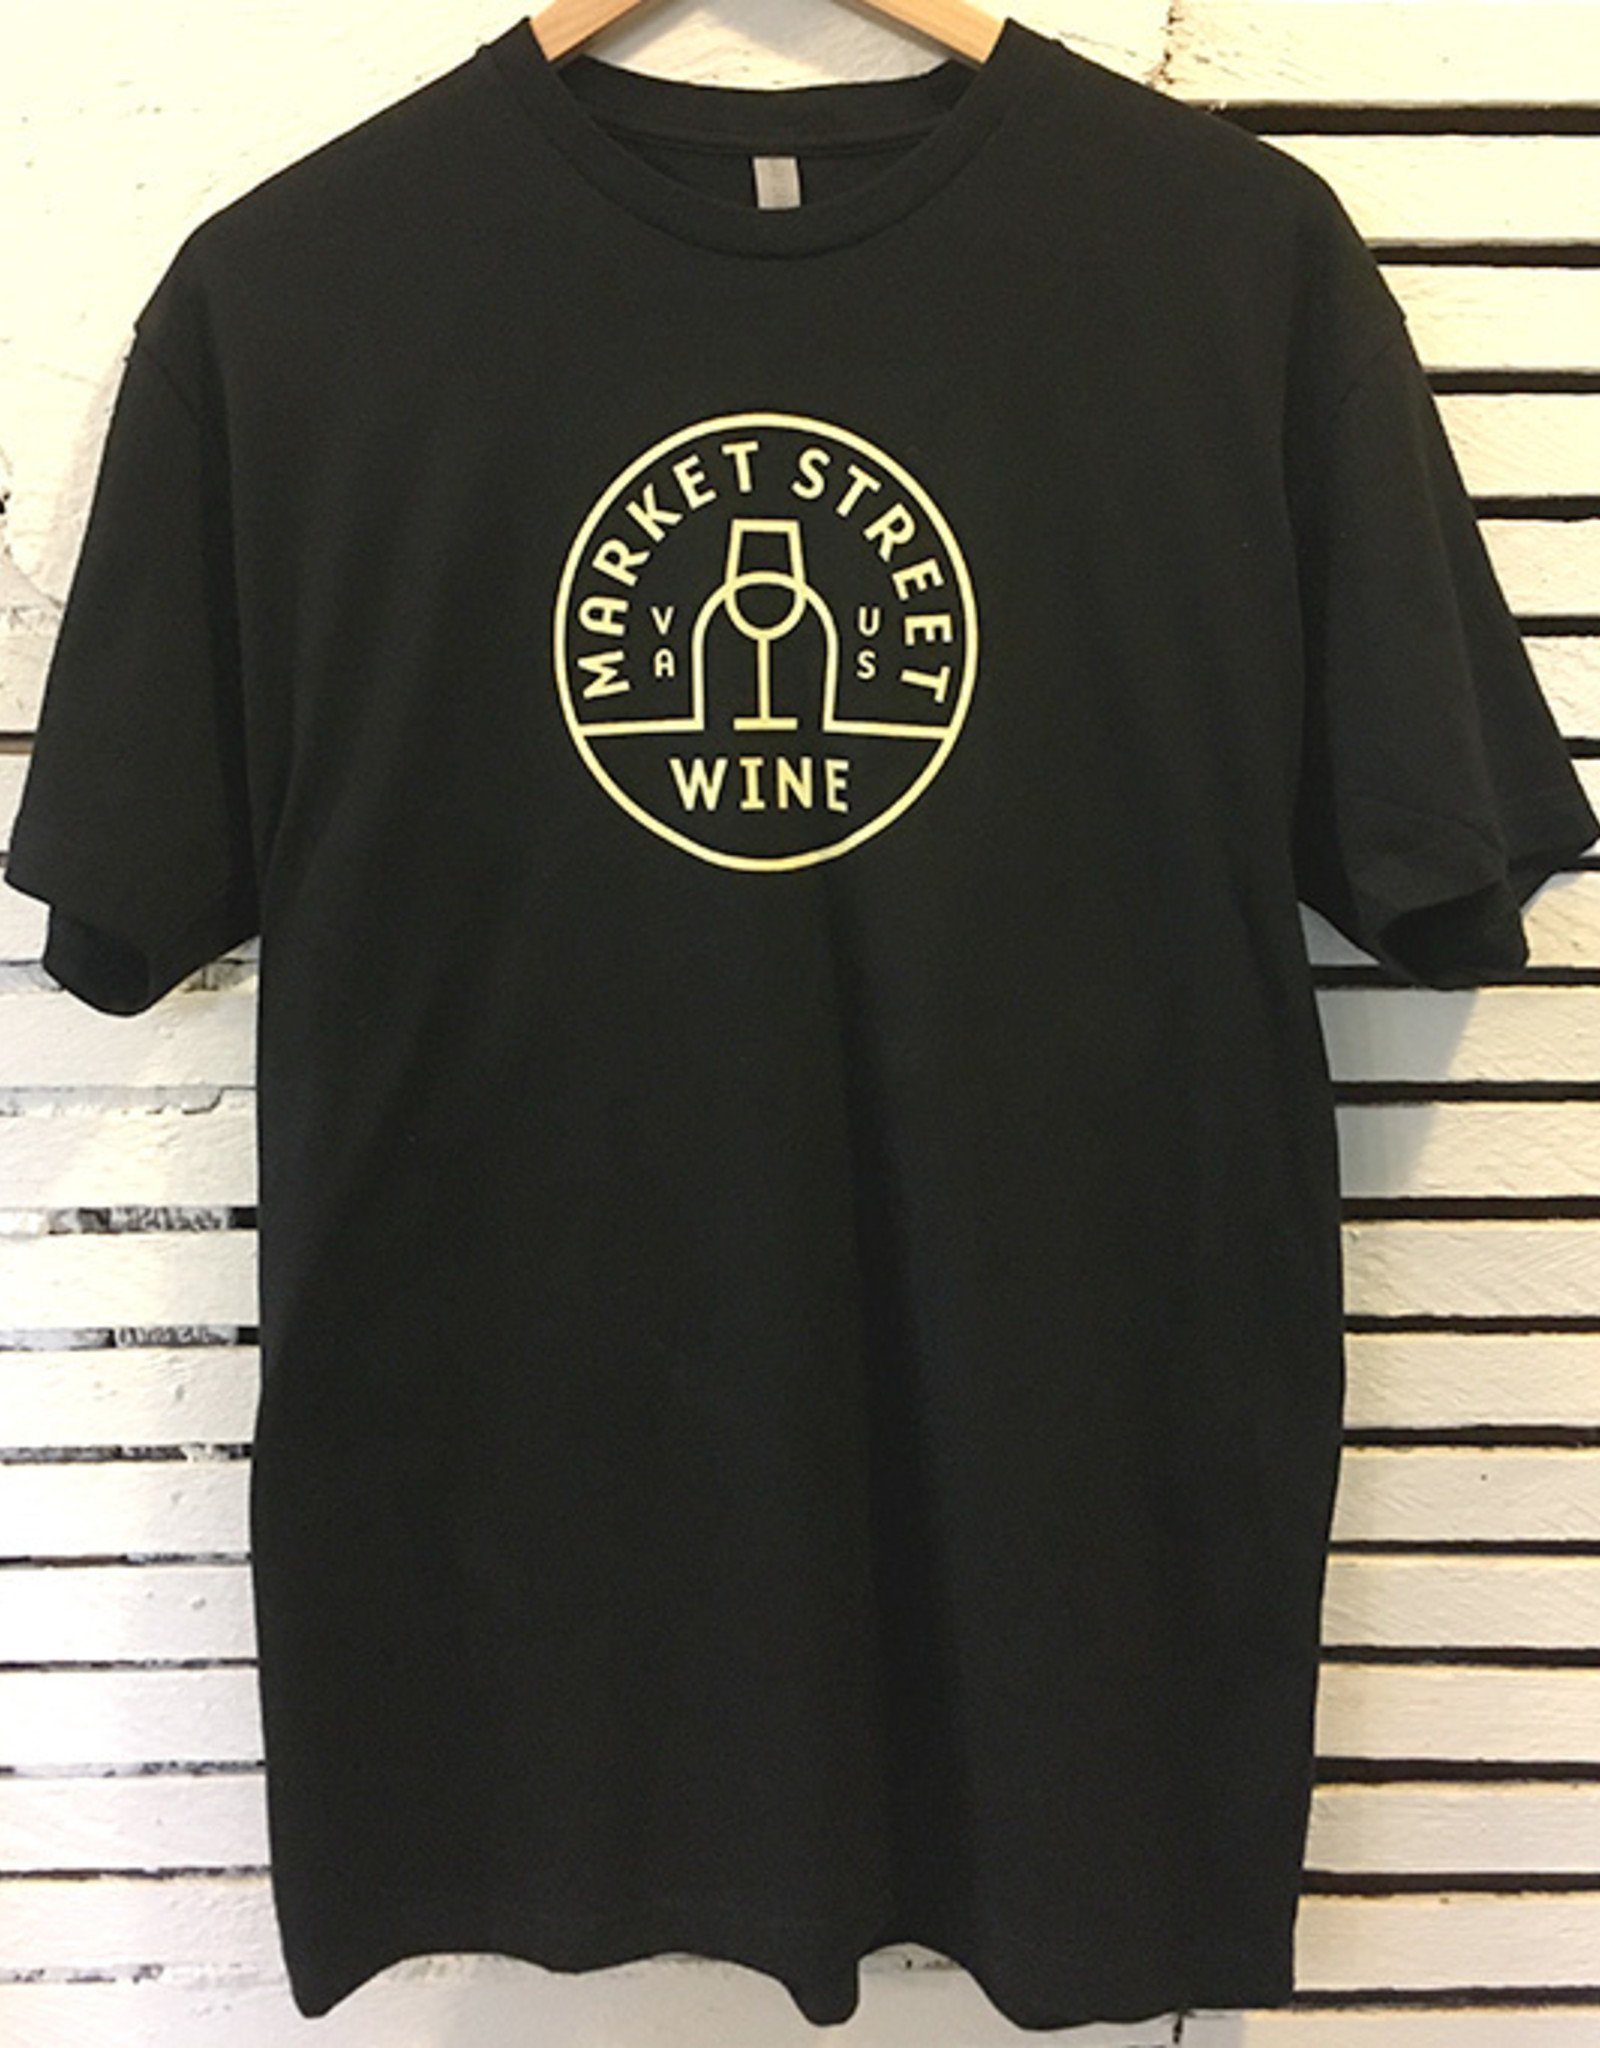 Market Street Wine T-shirt